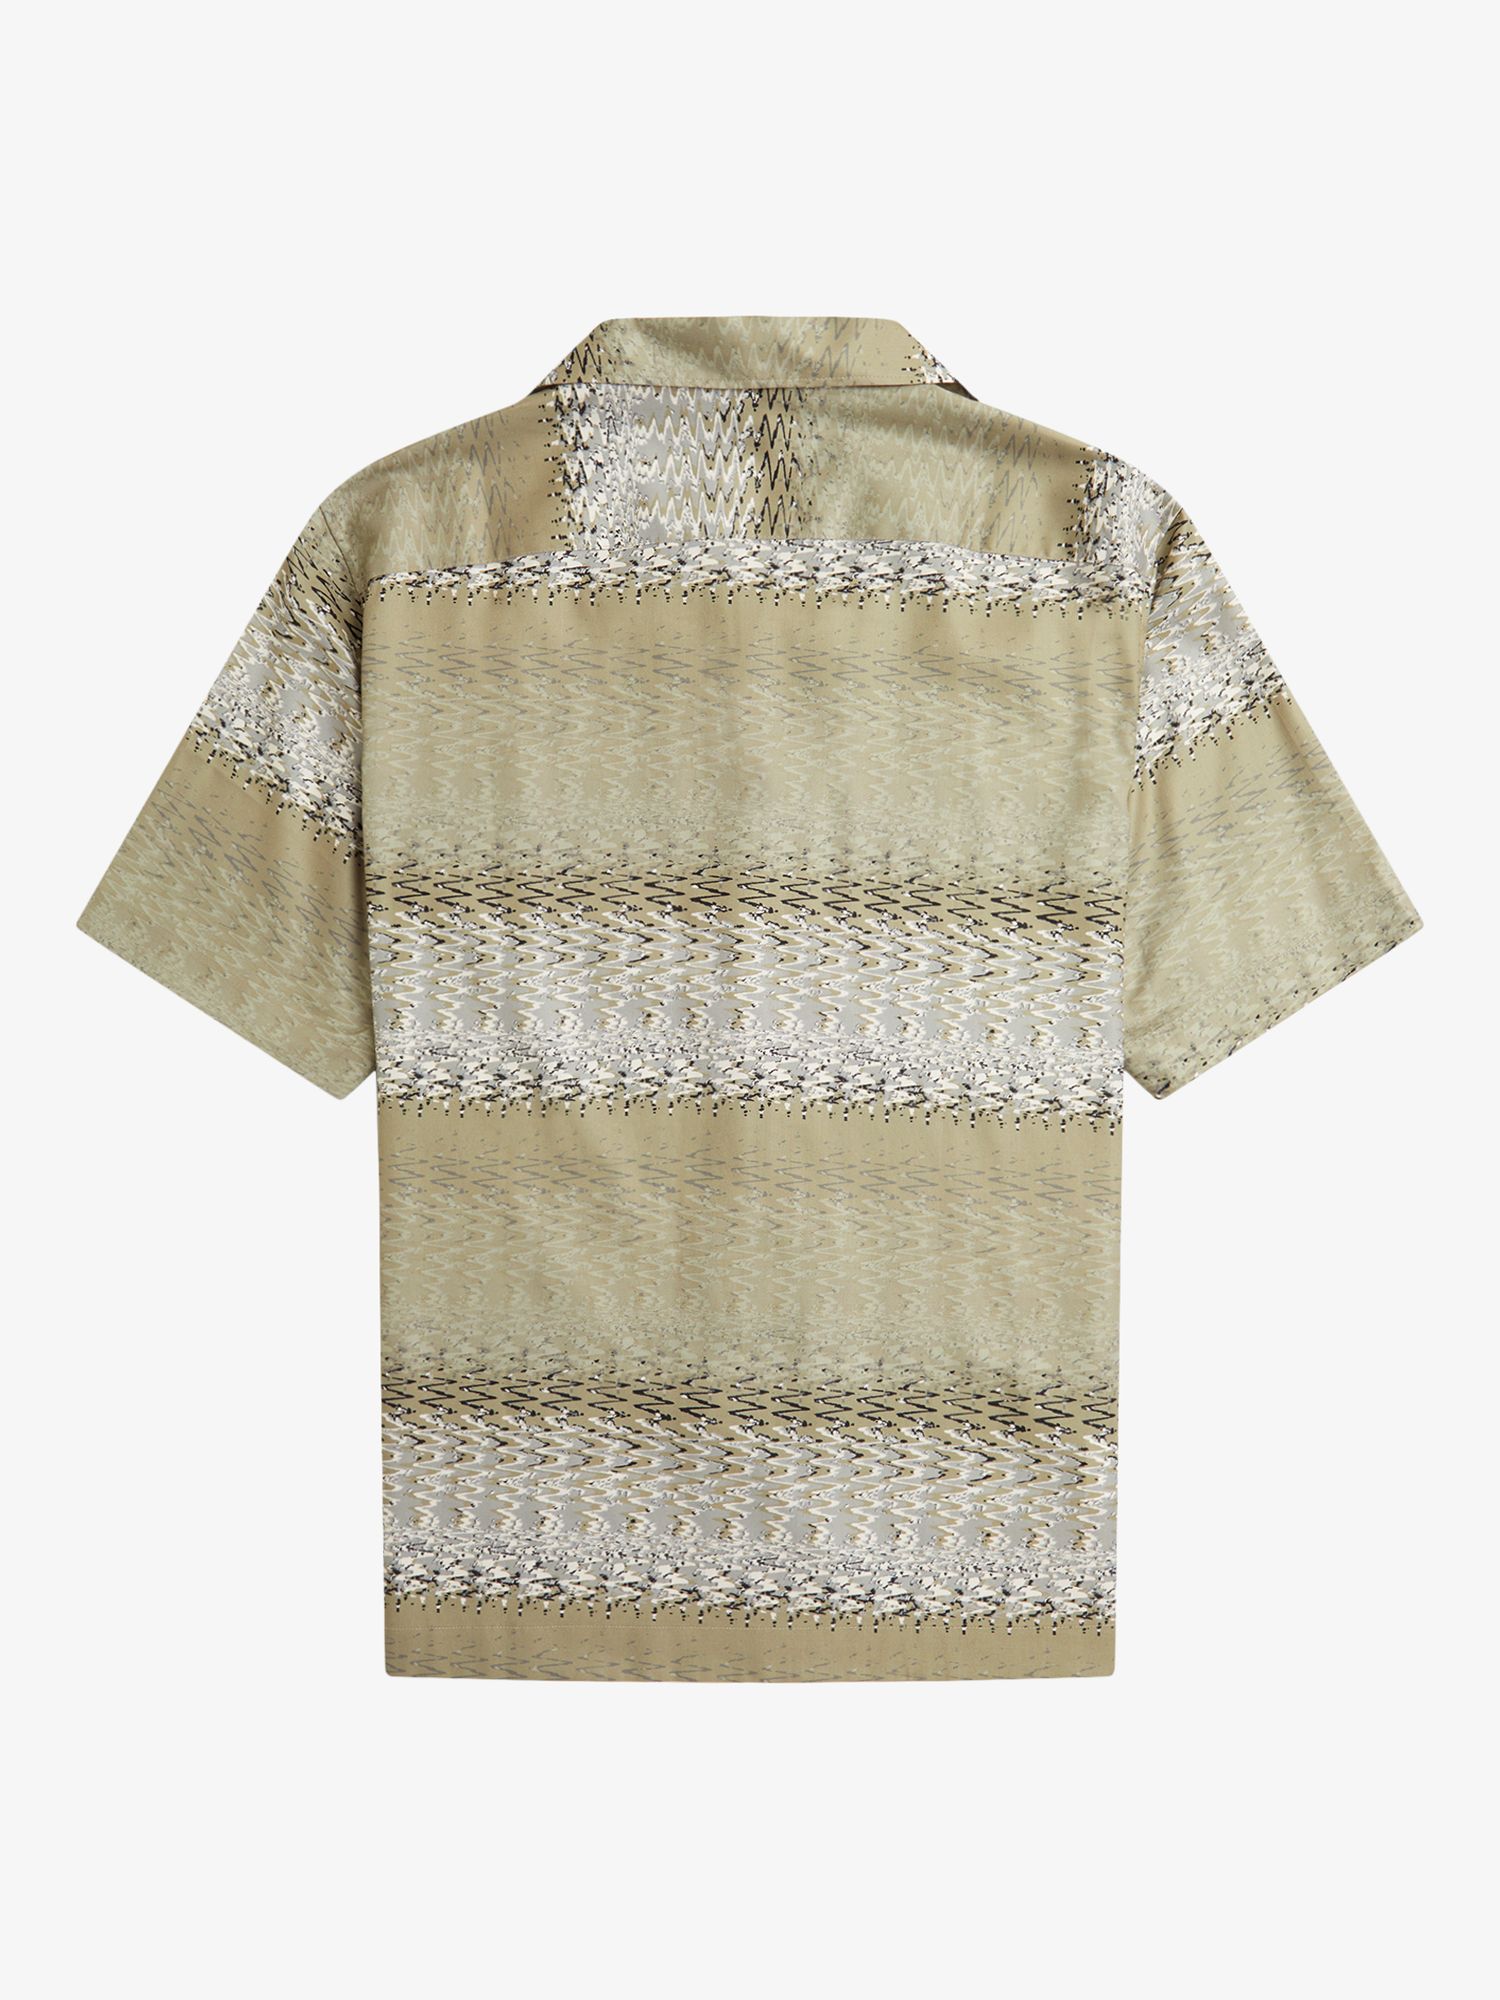 Fred Perry Short Sleeve Print Shirt, Grey/Multi, M